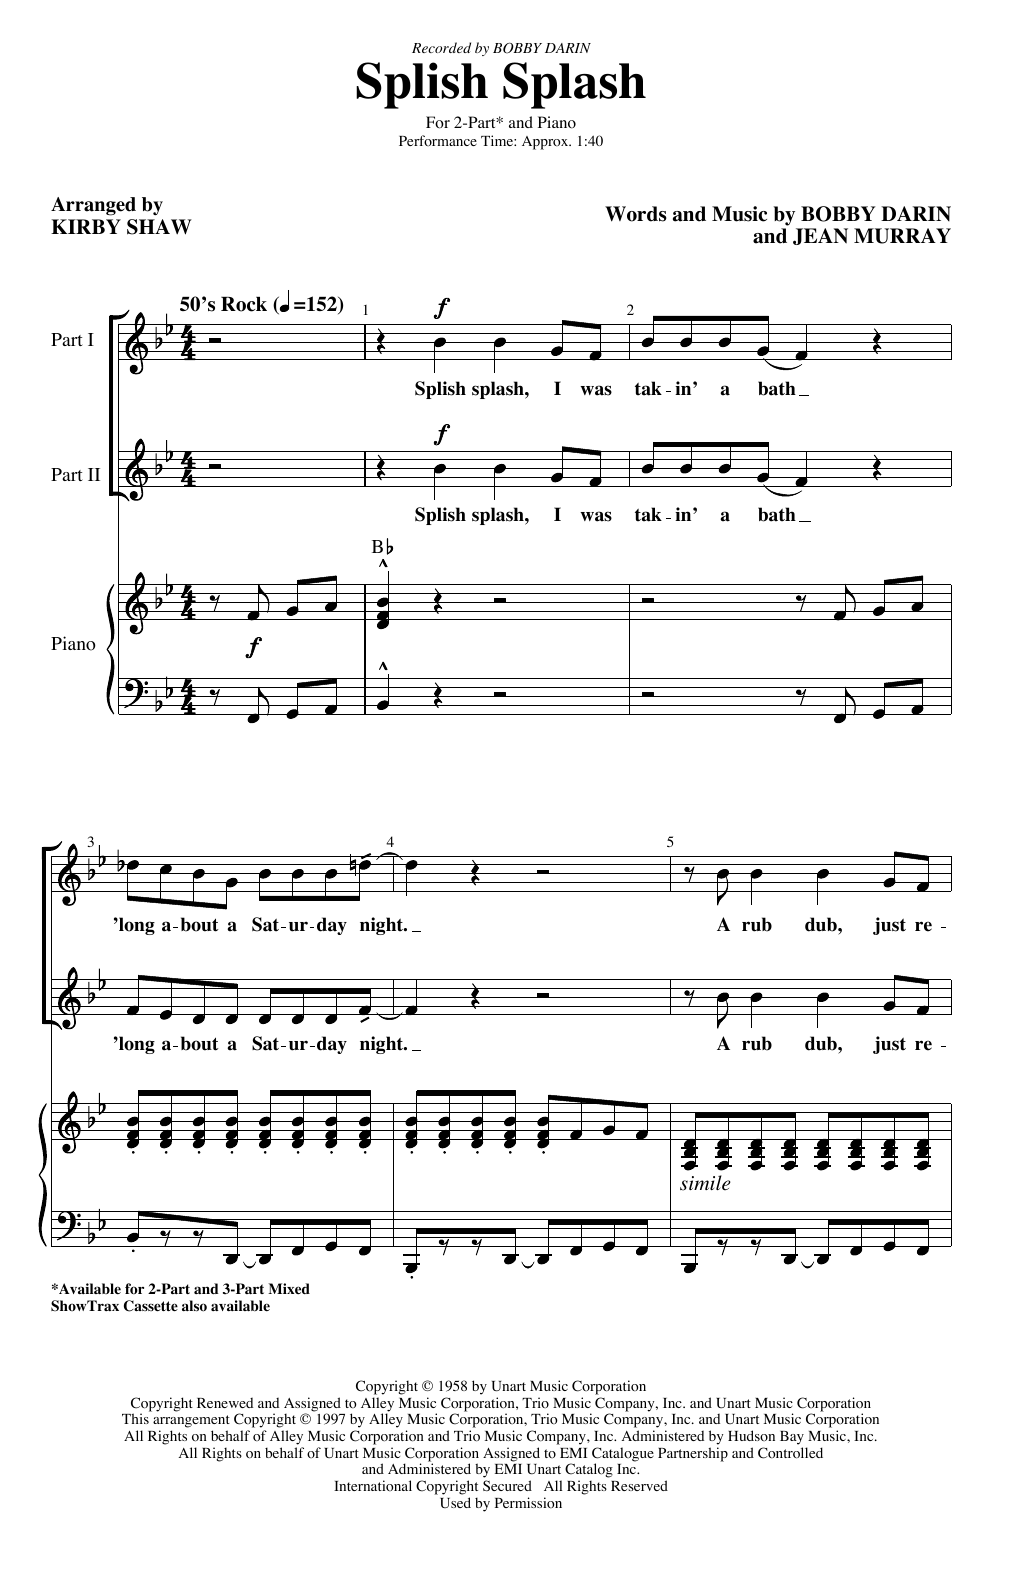 Bobby Darin Splish Splash (arr. Kirby Shaw) Sheet Music Notes & Chords for 3-Part Mixed Choir - Download or Print PDF